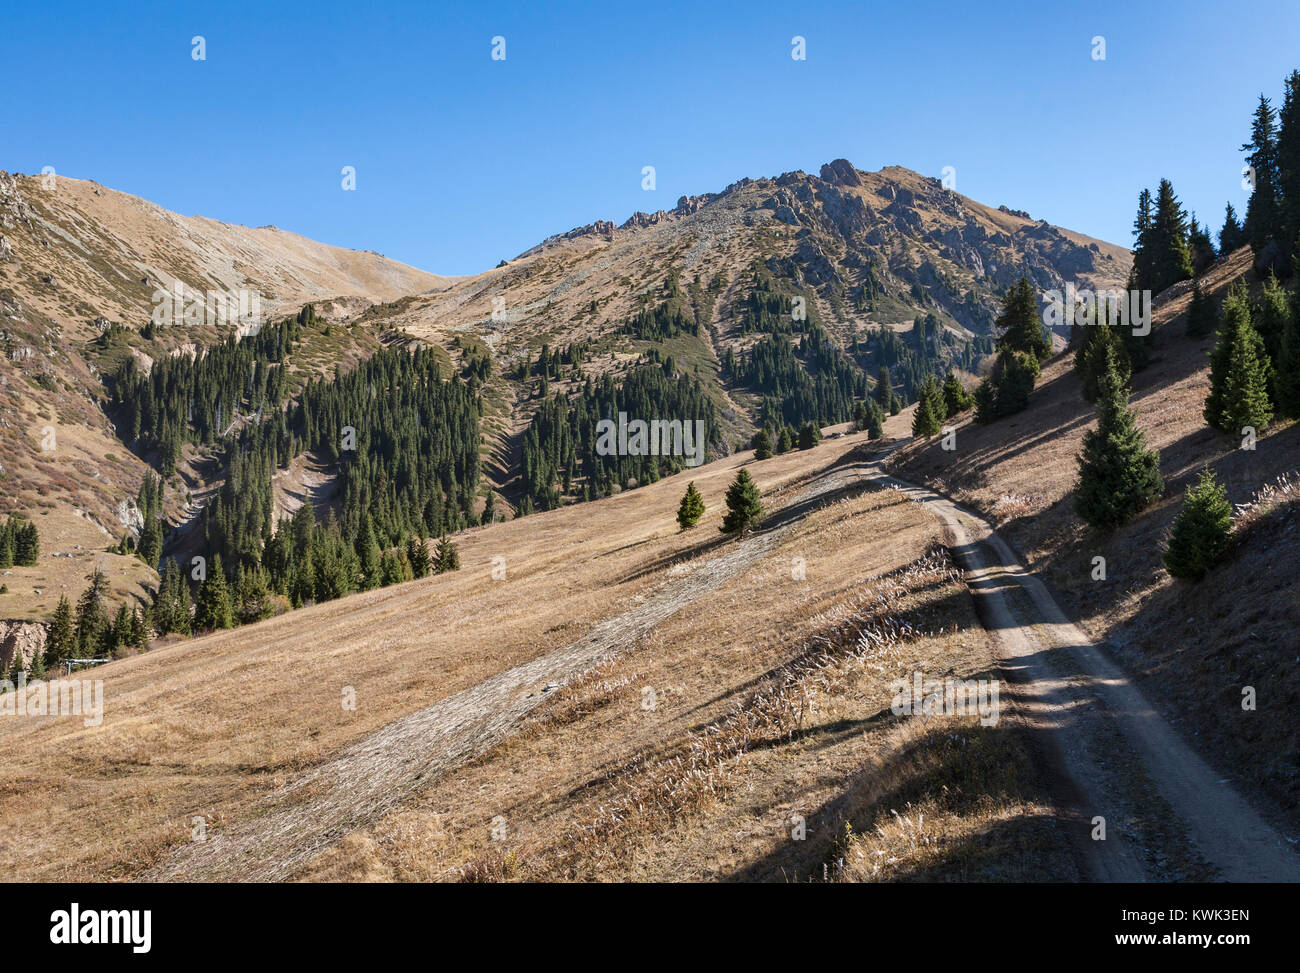 Paesaggio di montagna in zone aride Himalayan Zailiyskiy Alatau (Ile Alatau) pedemontana del nord del Tian Shan suddetta gamma Almaty, Kazakhstan, Asia Foto Stock